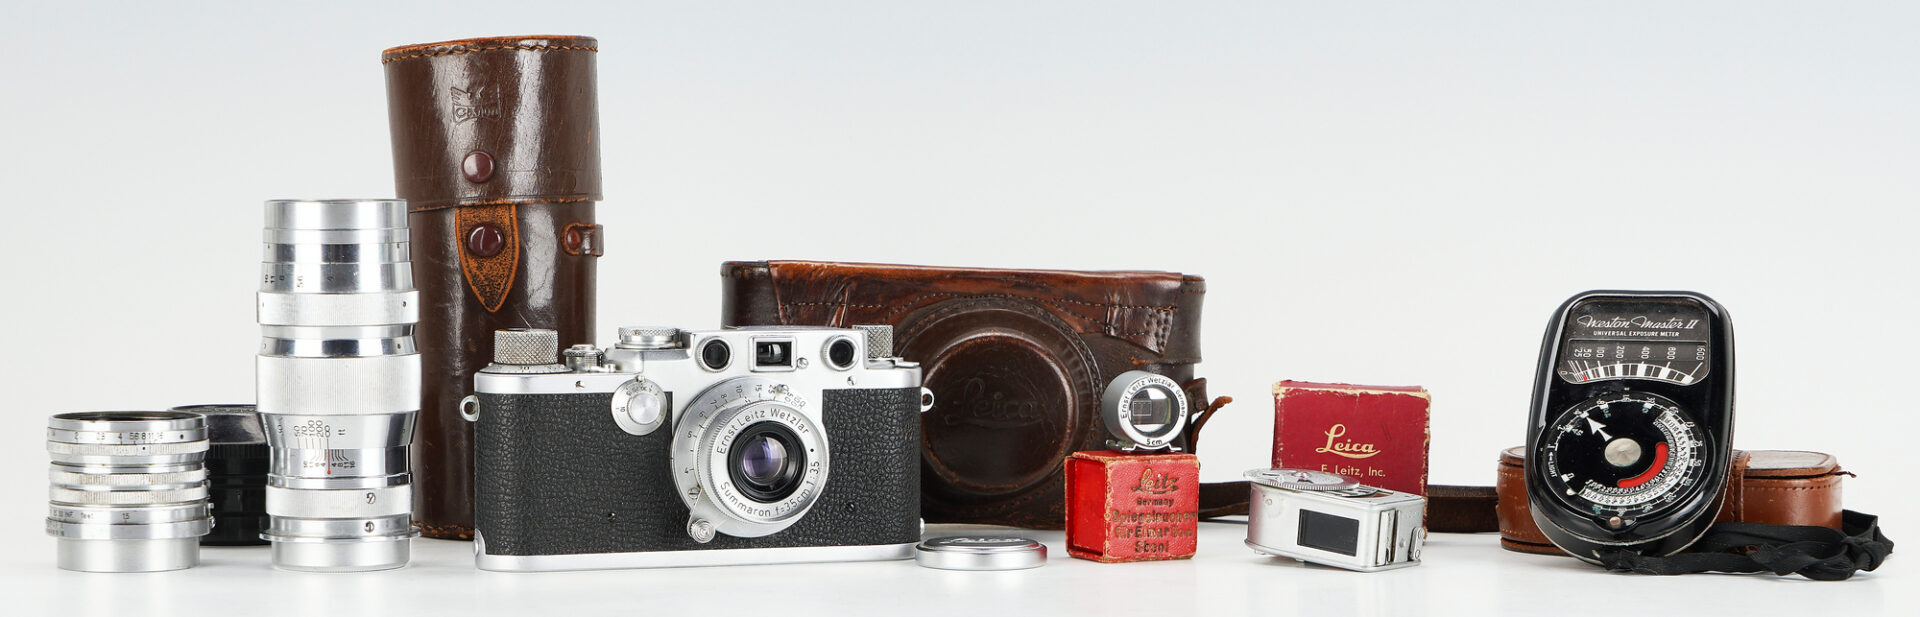 Lot 742: Leica IIIf Camera w/ Accessories, 8 items